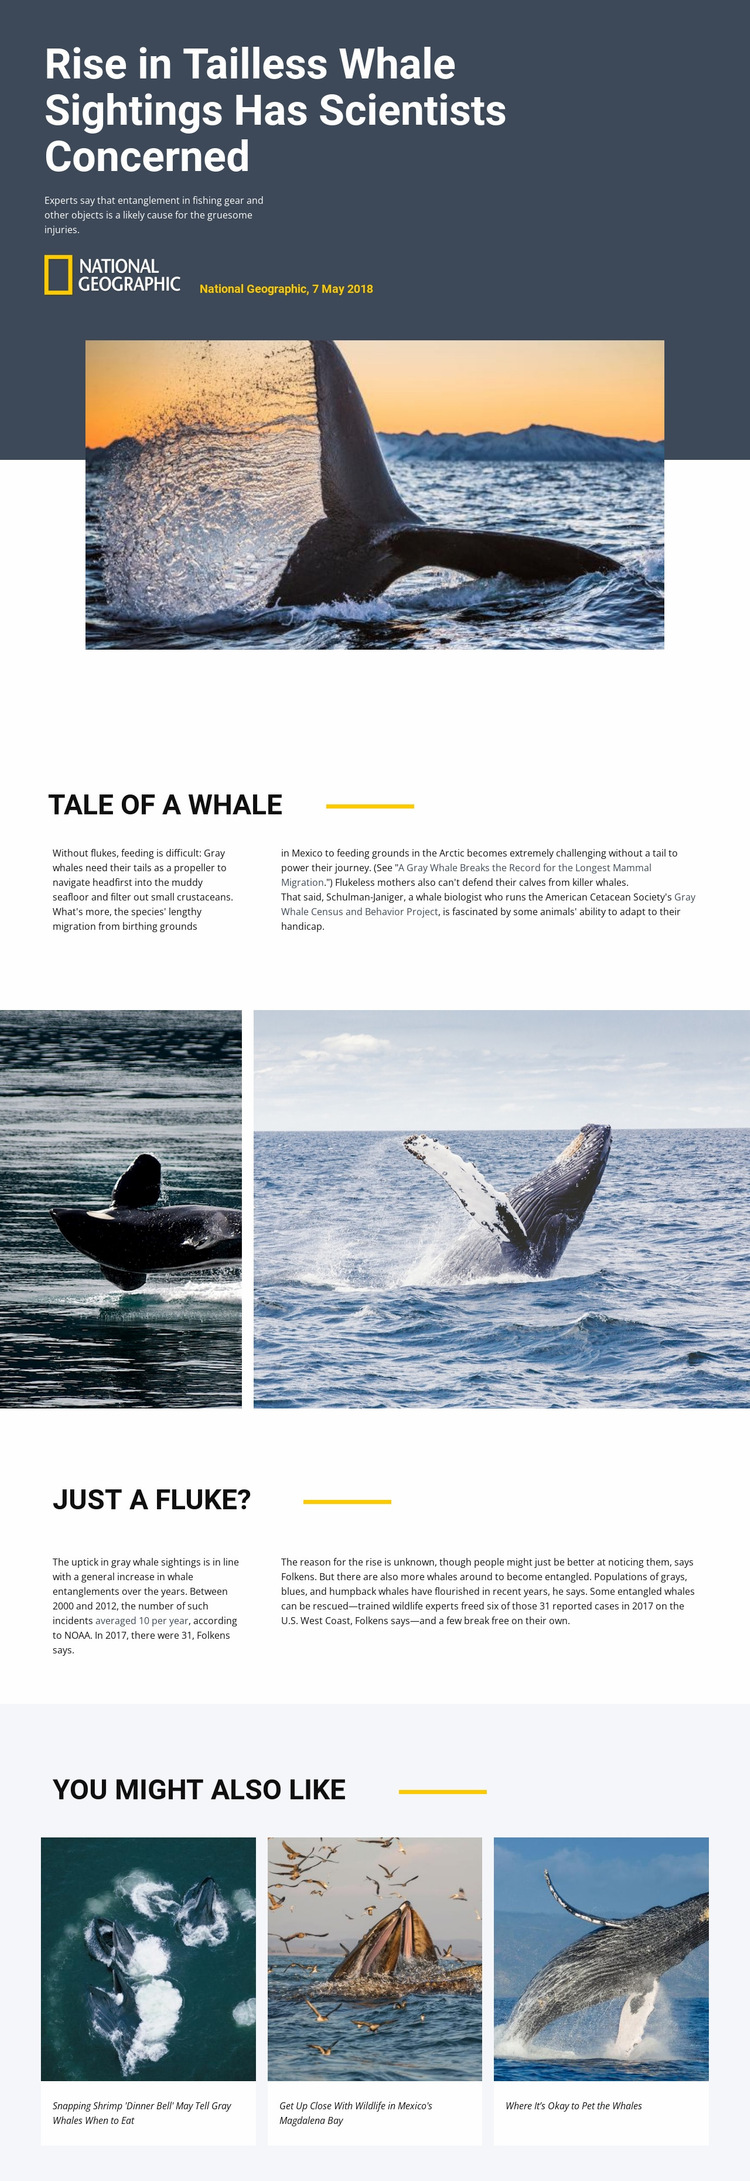 Whale watching center Website Builder Templates